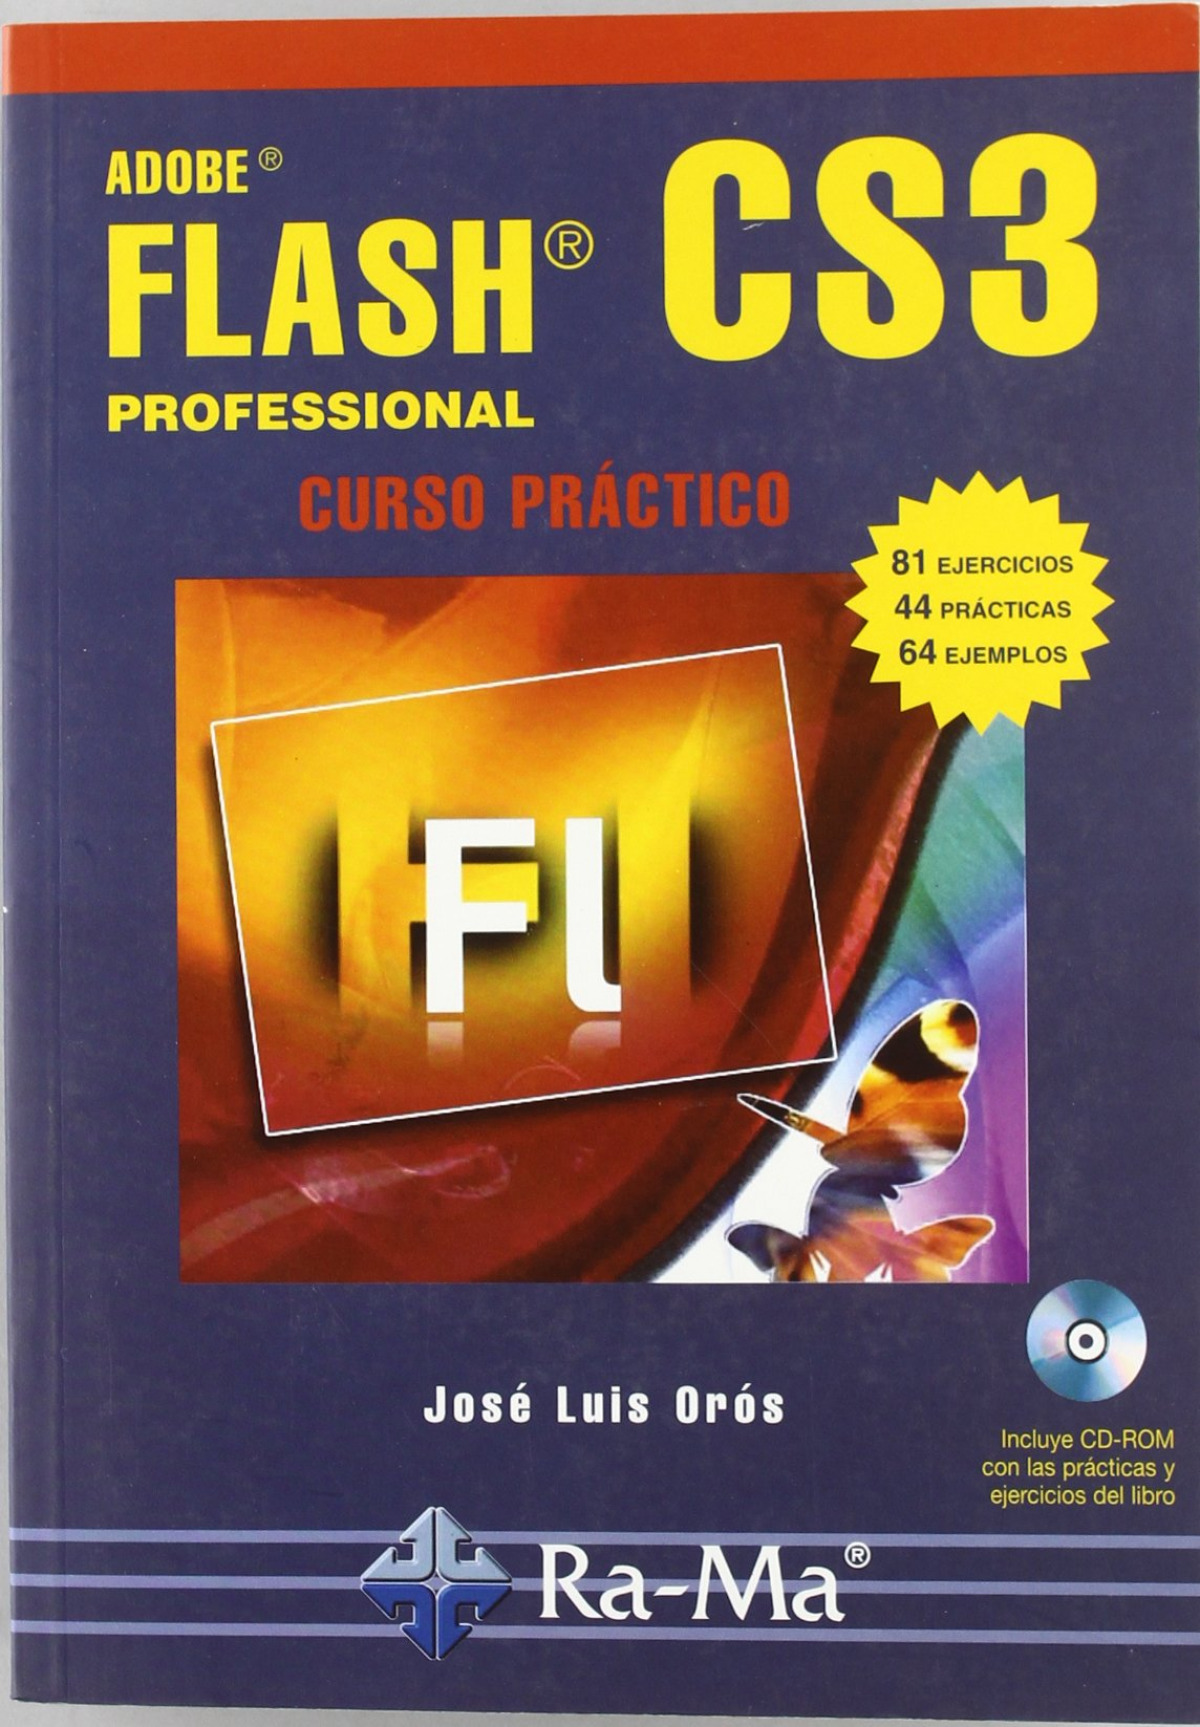 Adobe flash cs3 professional: curso practico (+cd) - Oros, Jose Luis